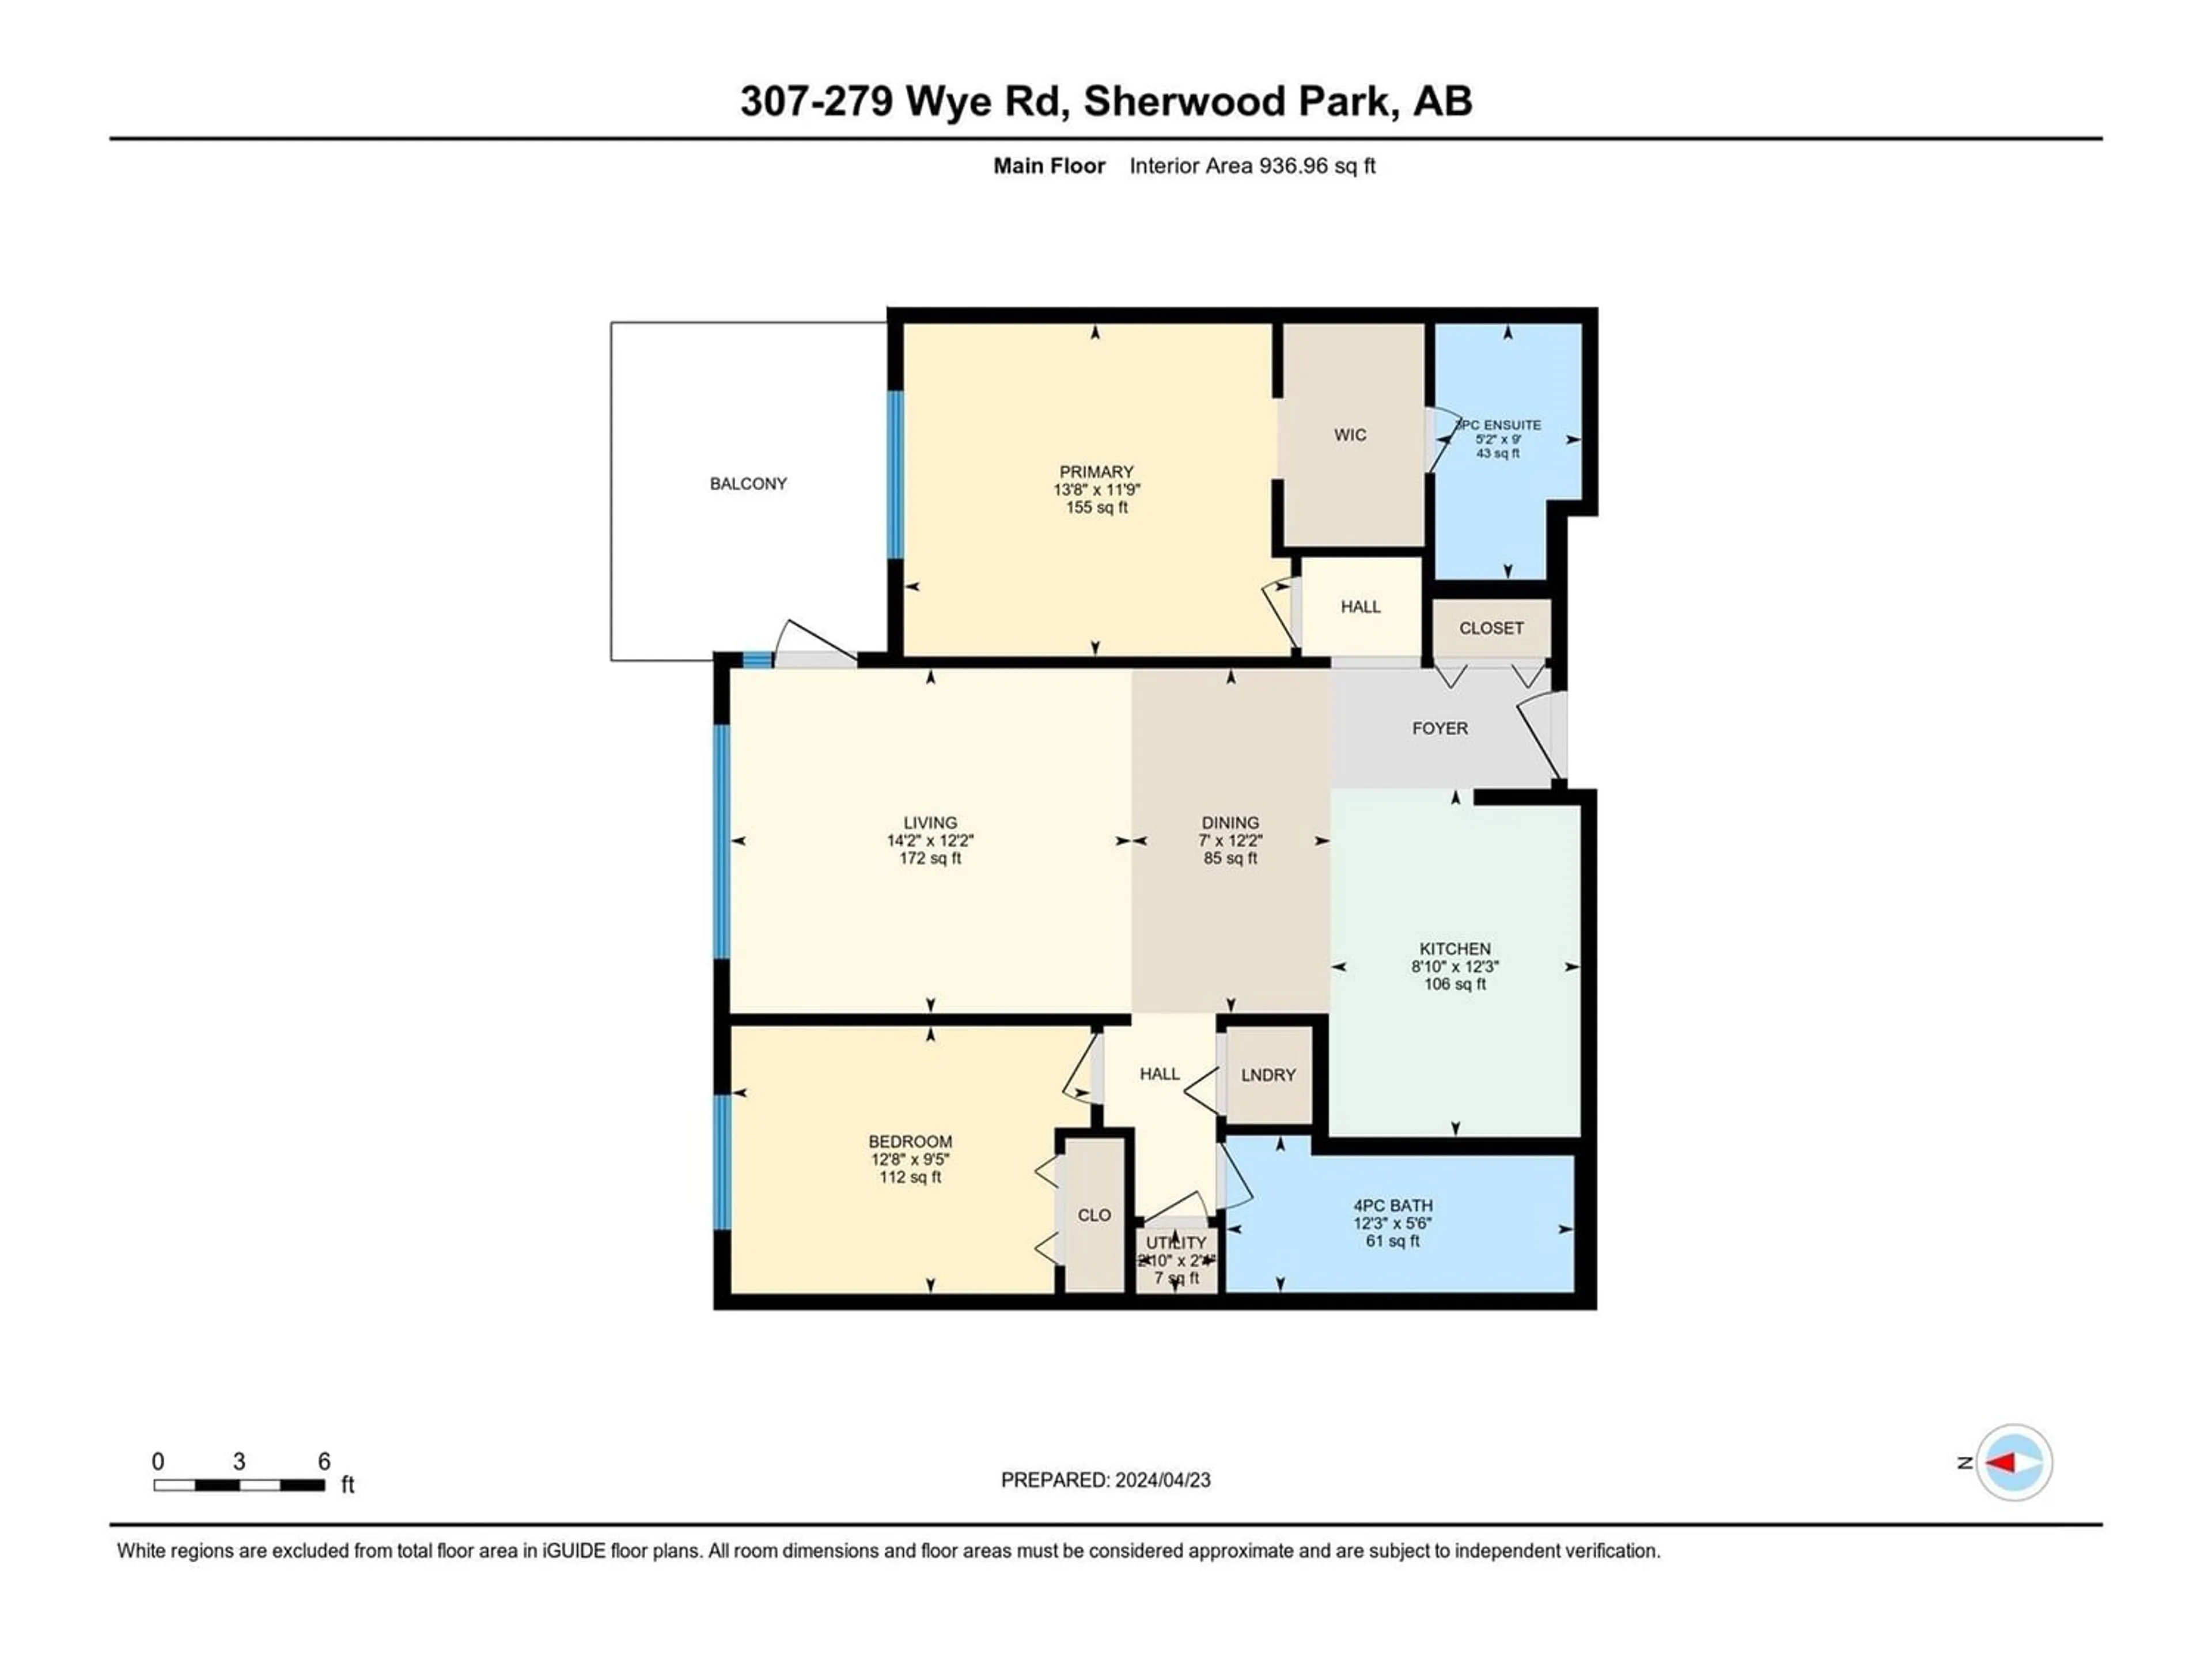 Floor plan for #307 279 WYE RD, Sherwood Park Alberta T8B0A4